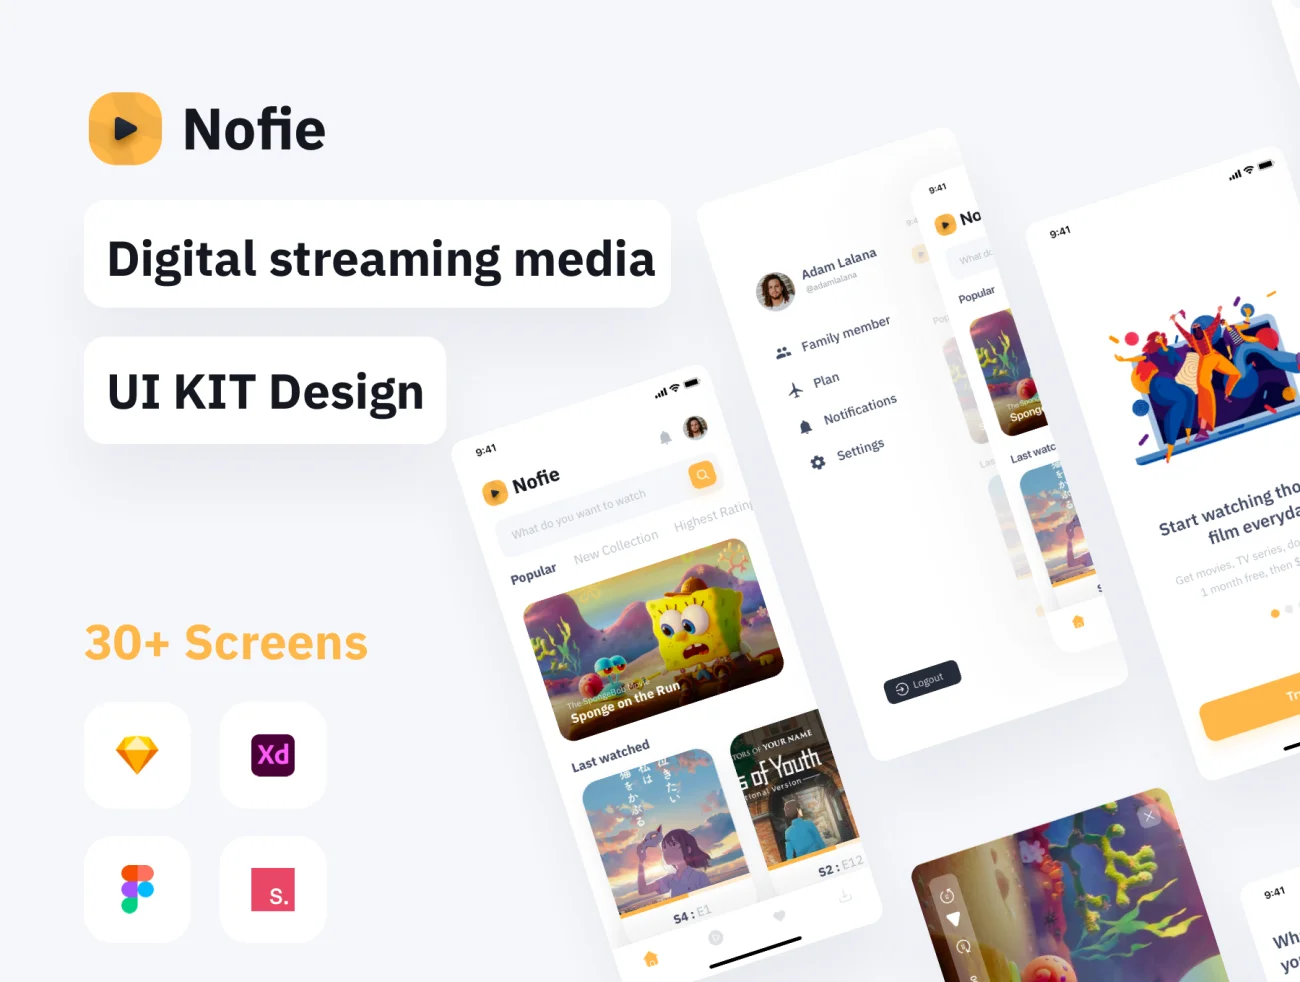 Nofie - Digital streaming media UI KIT 数字多媒体应用观看电影电视以及离线下载UI设计套件-UI/UX、ui套件、列表、卡片式、应用、海报、详情-到位啦UI